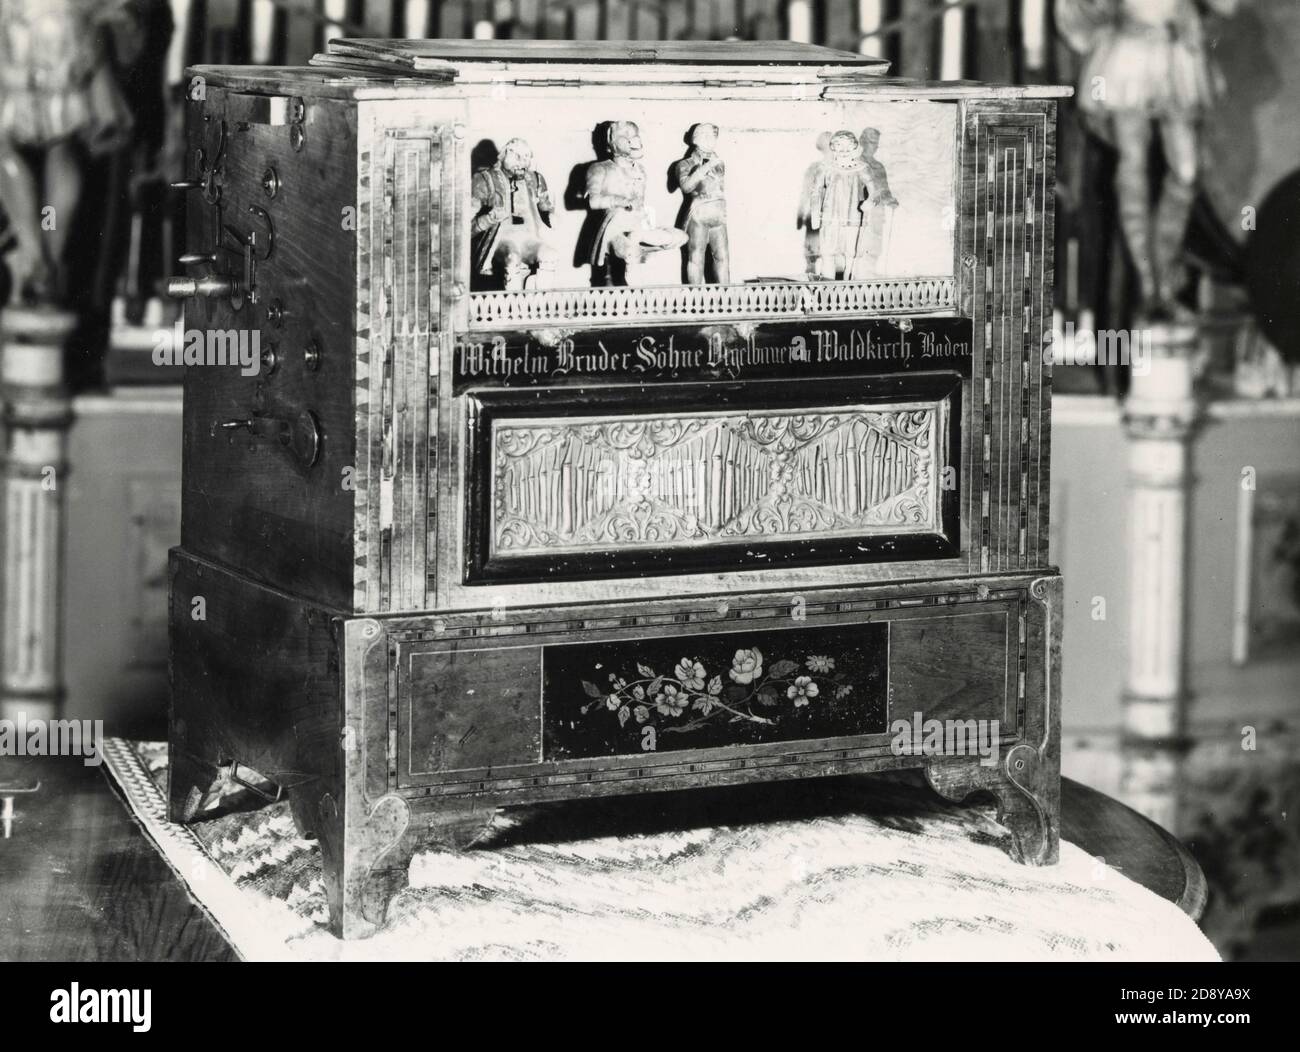 Antique music boxes Wilhelm Bruder Sohne Waldkirch, Germany Stock Photo